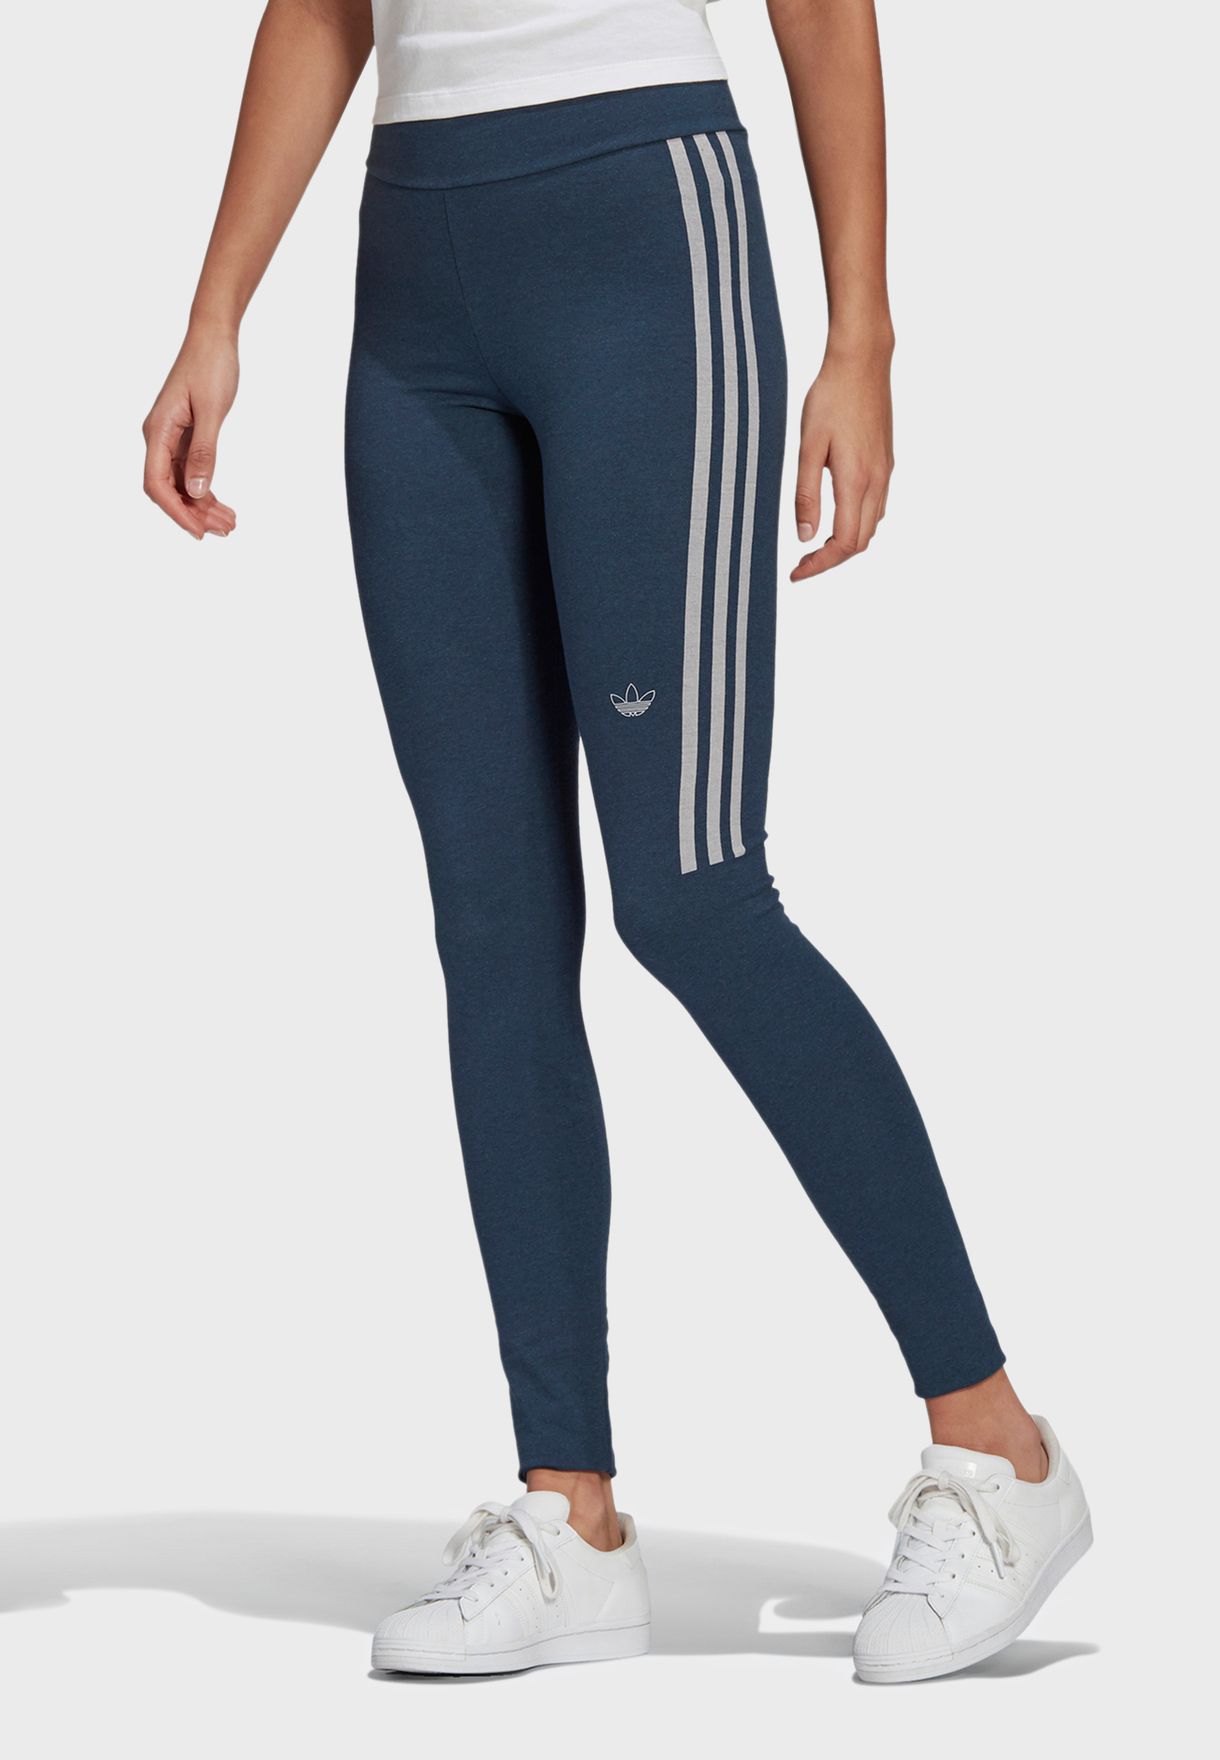 Buy > trefoil leggings > in stock